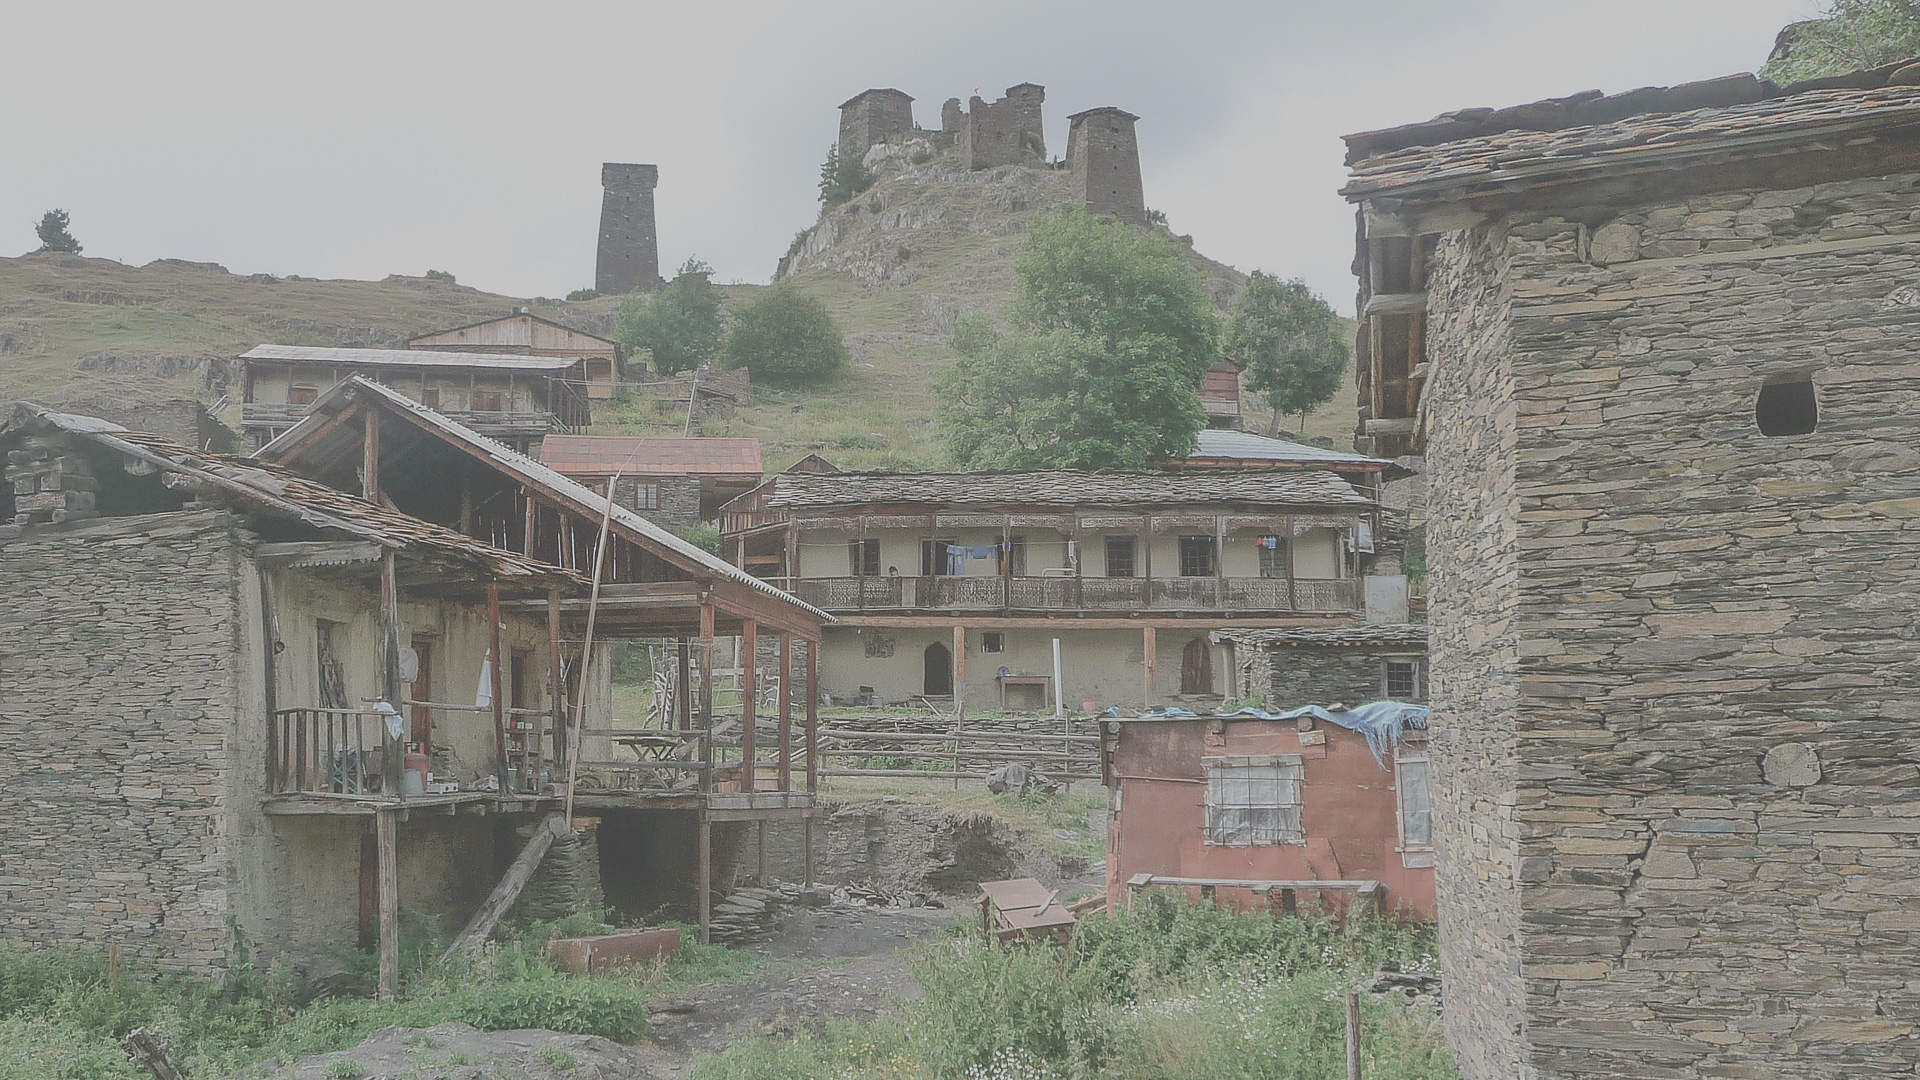 Tusheti viallage and castle